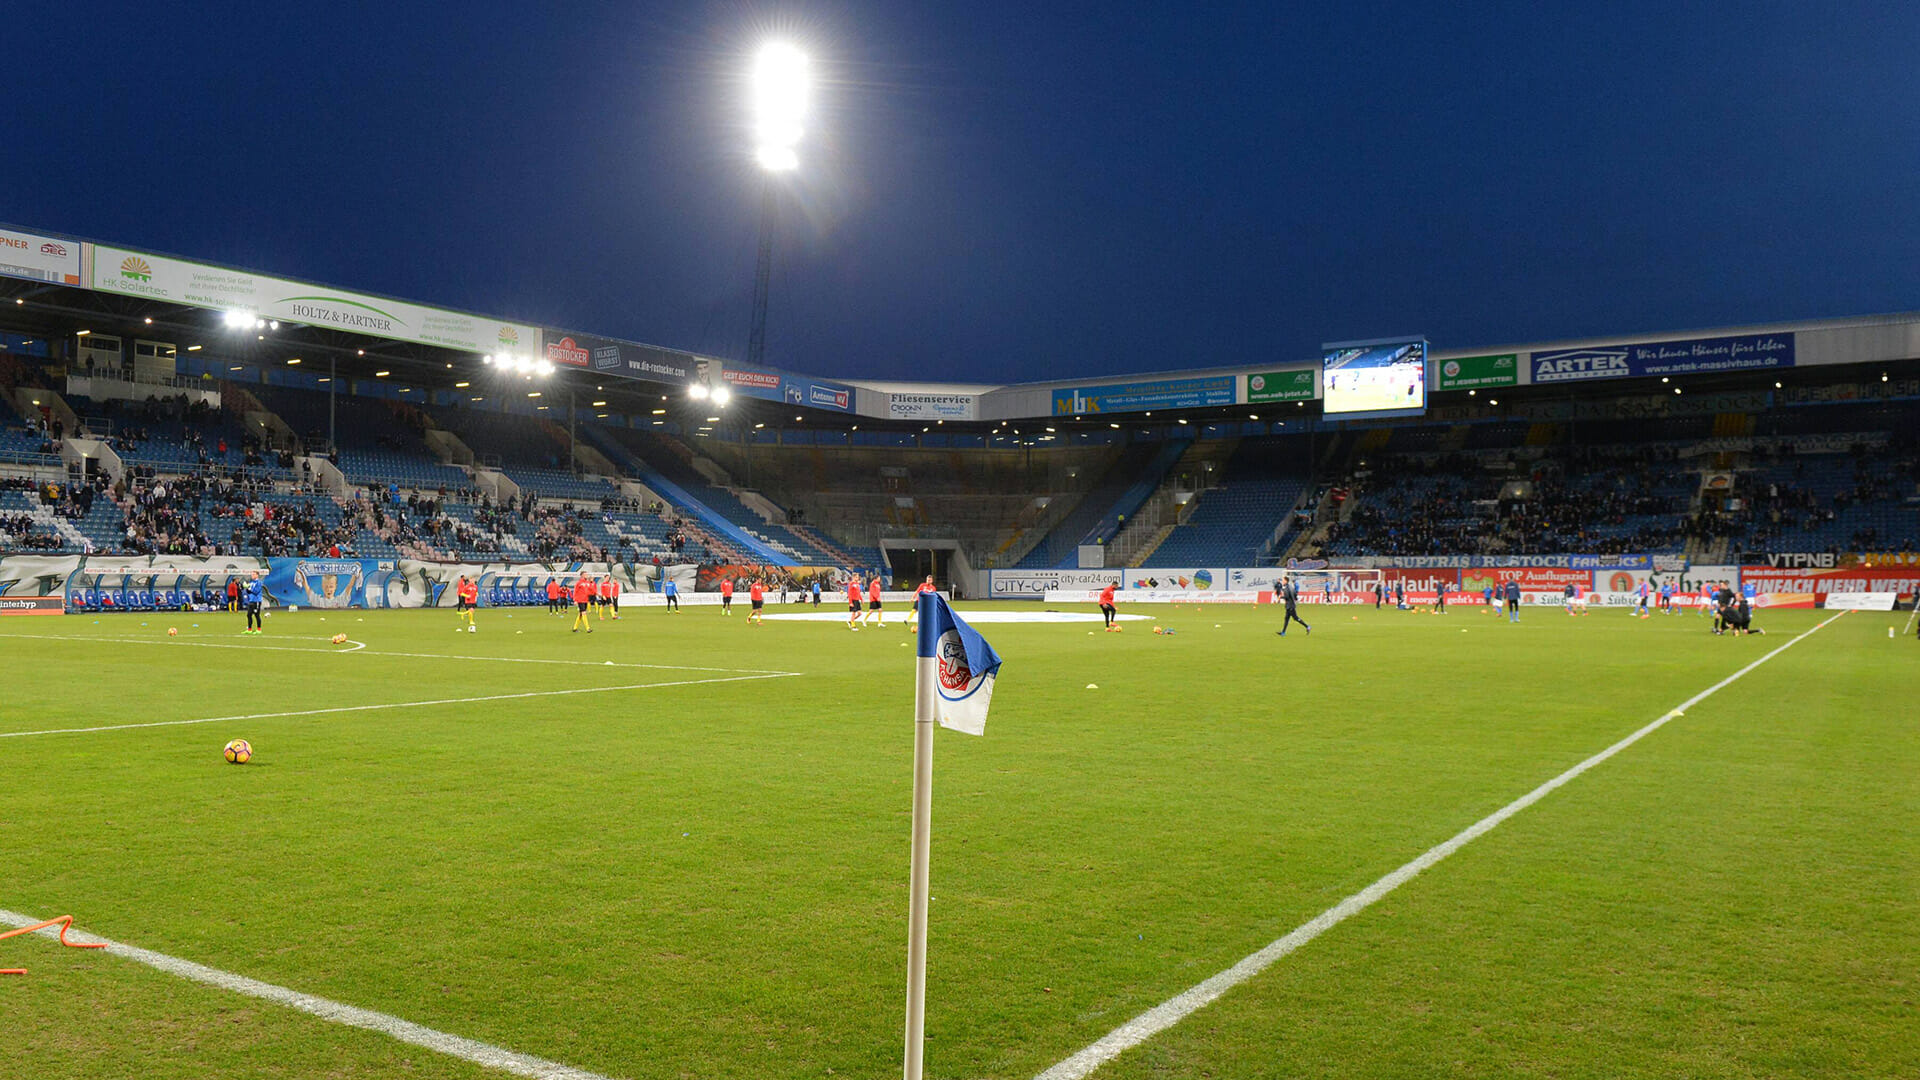 210922_Rostock_Stadion